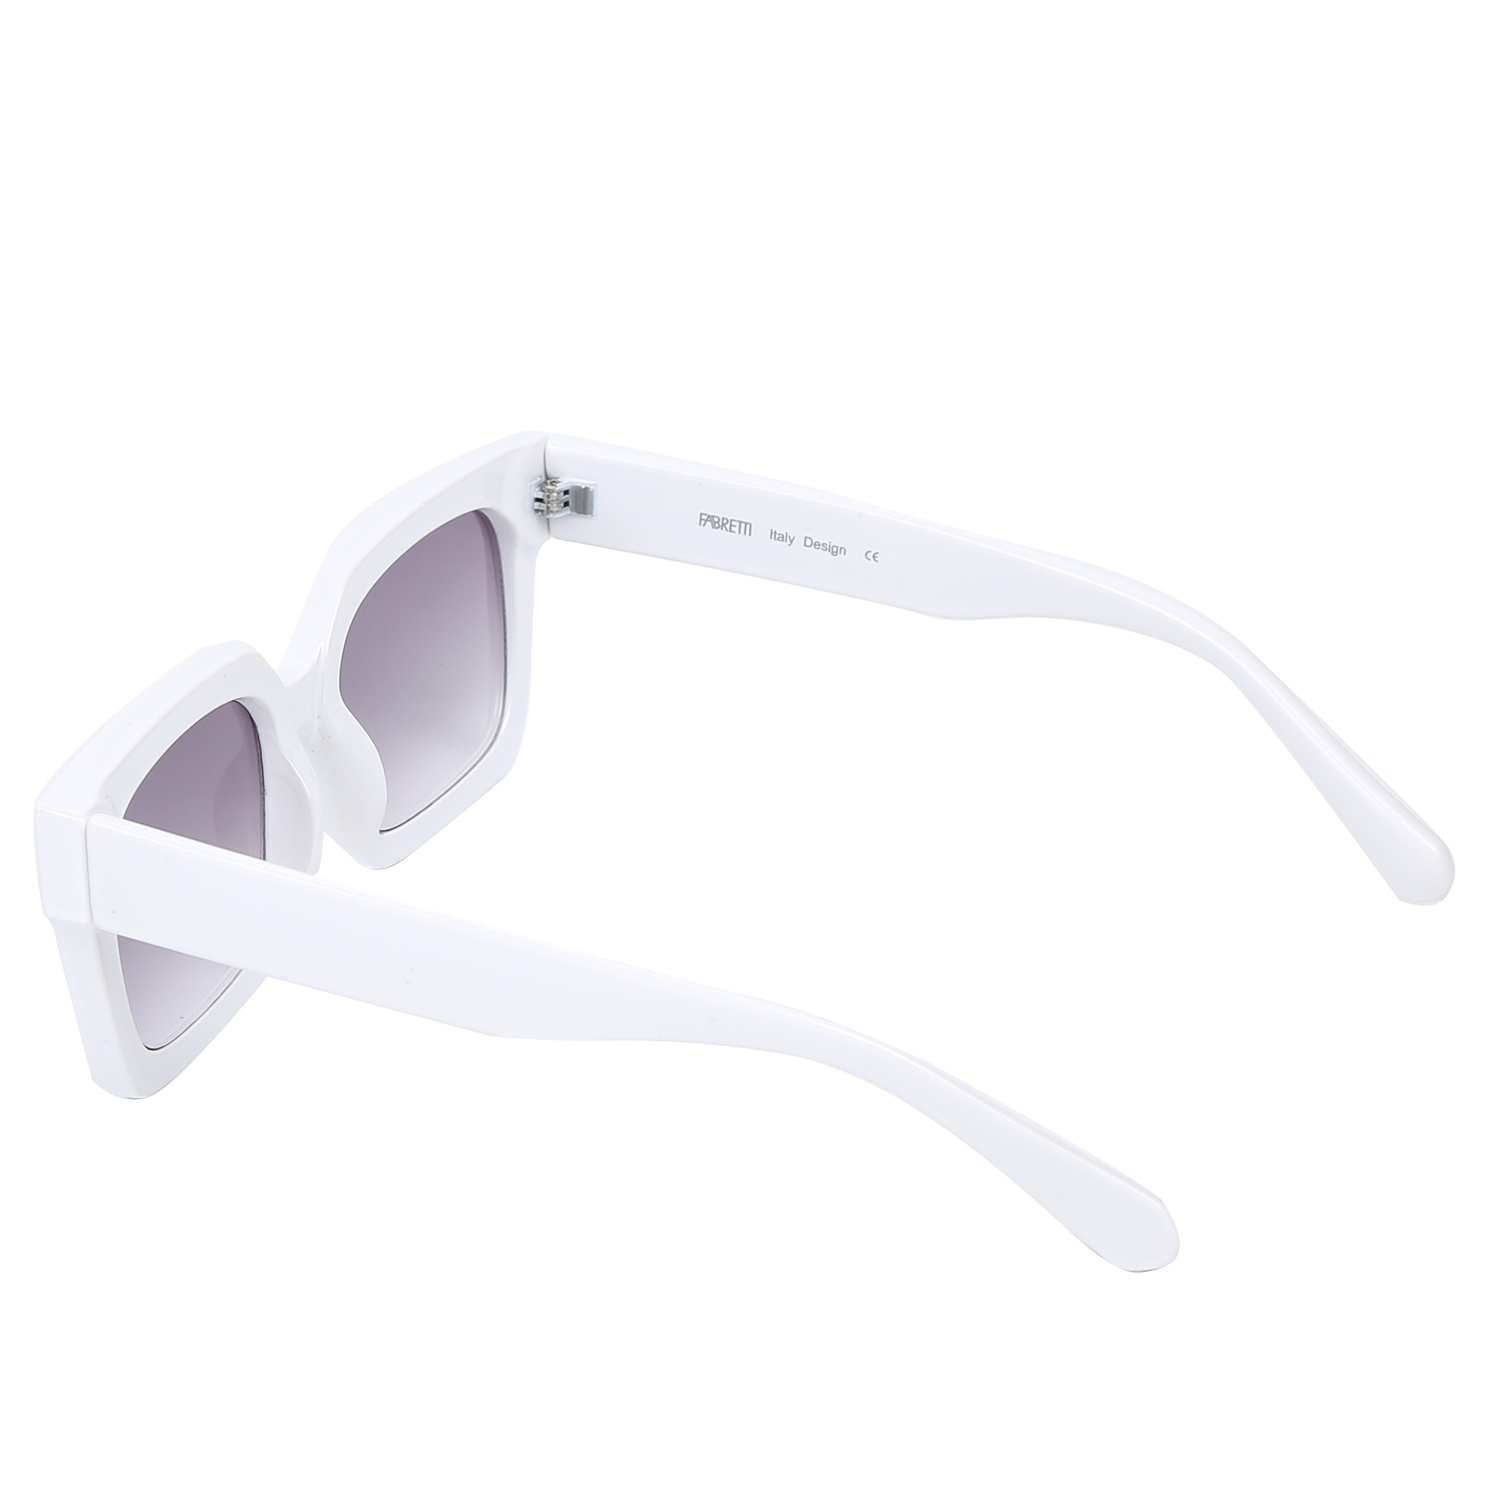 Cолнцезащитные очки J22202203a-1 FABRETTI